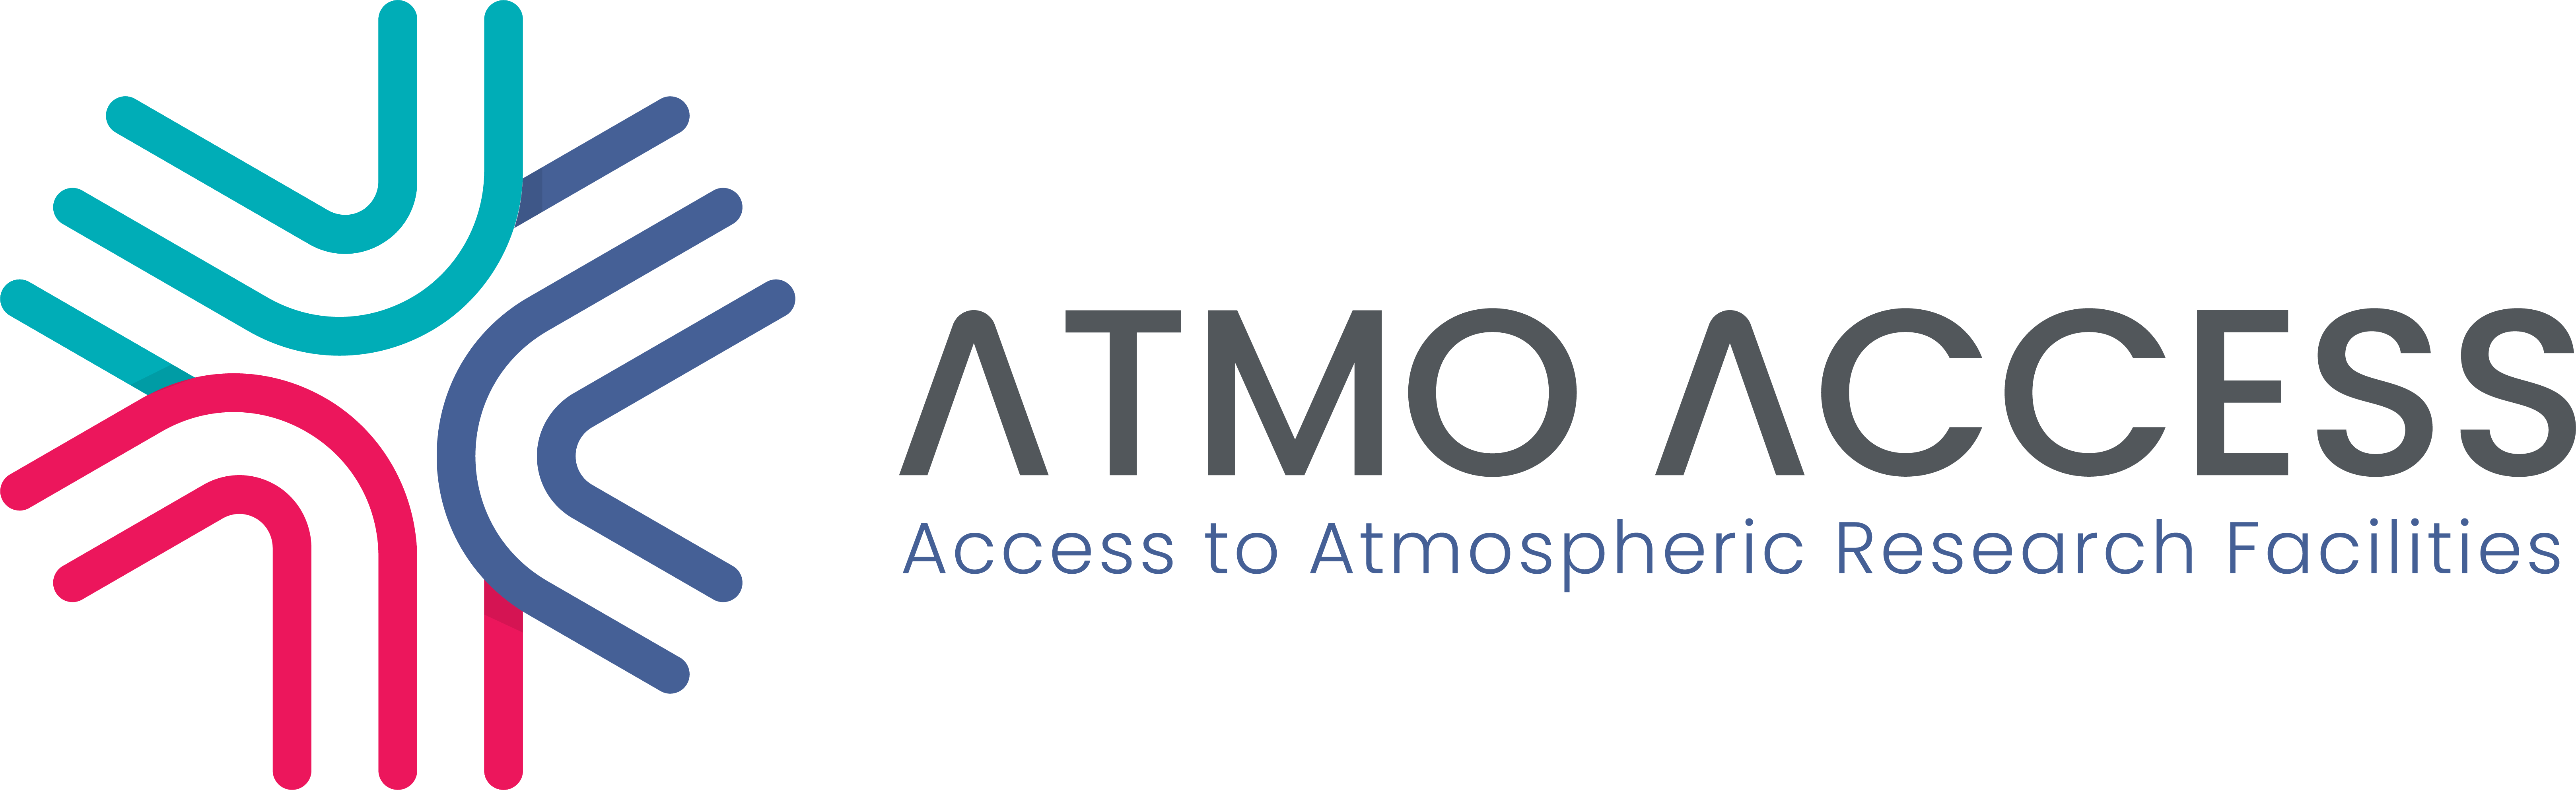 ATMO ACCESS Logo final horizontal payoff grey blue